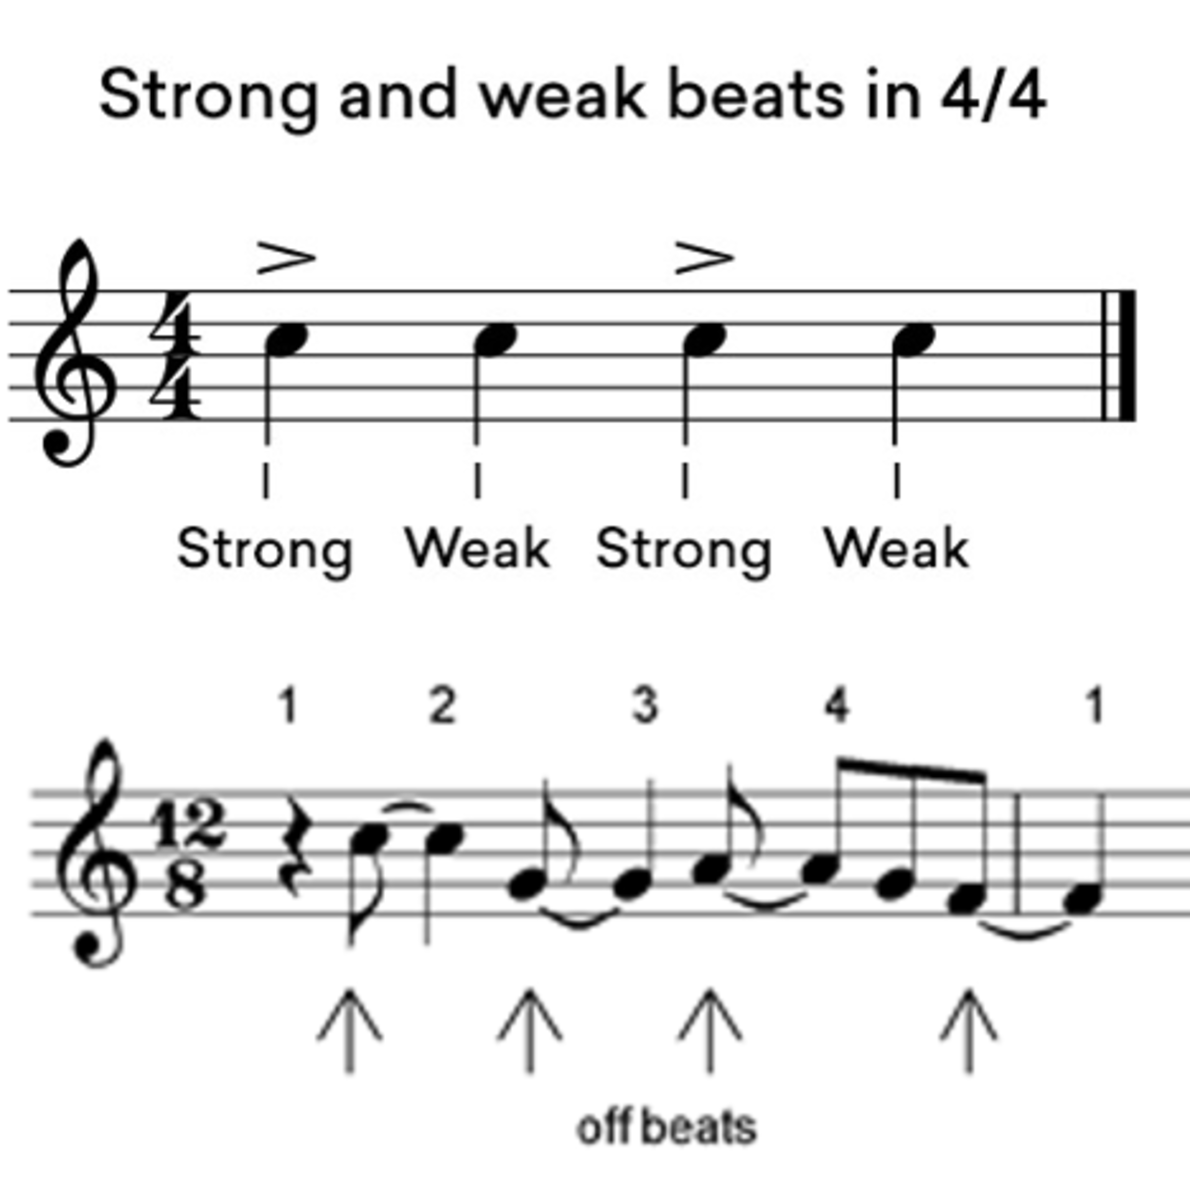 StrongandWeakbeats